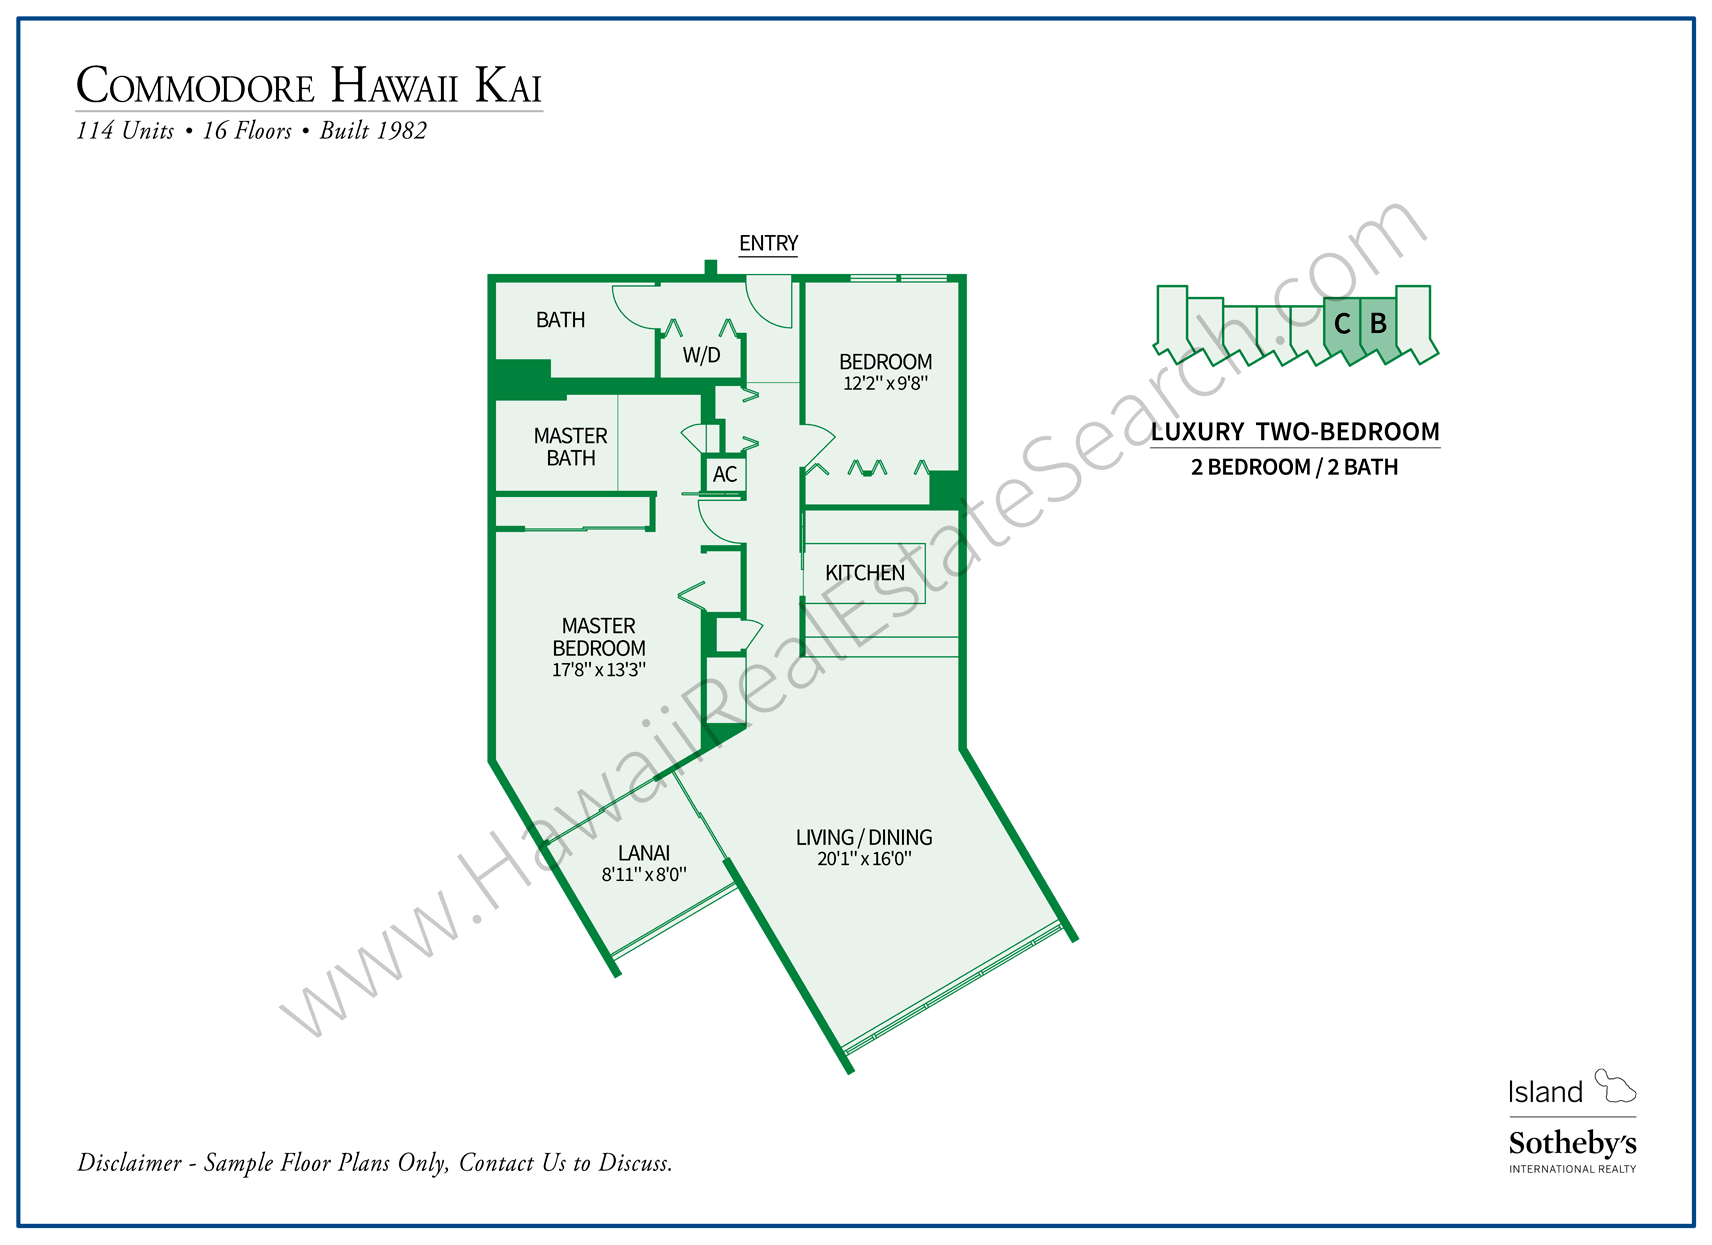 Hawaii Kai Commodore Floor Plan